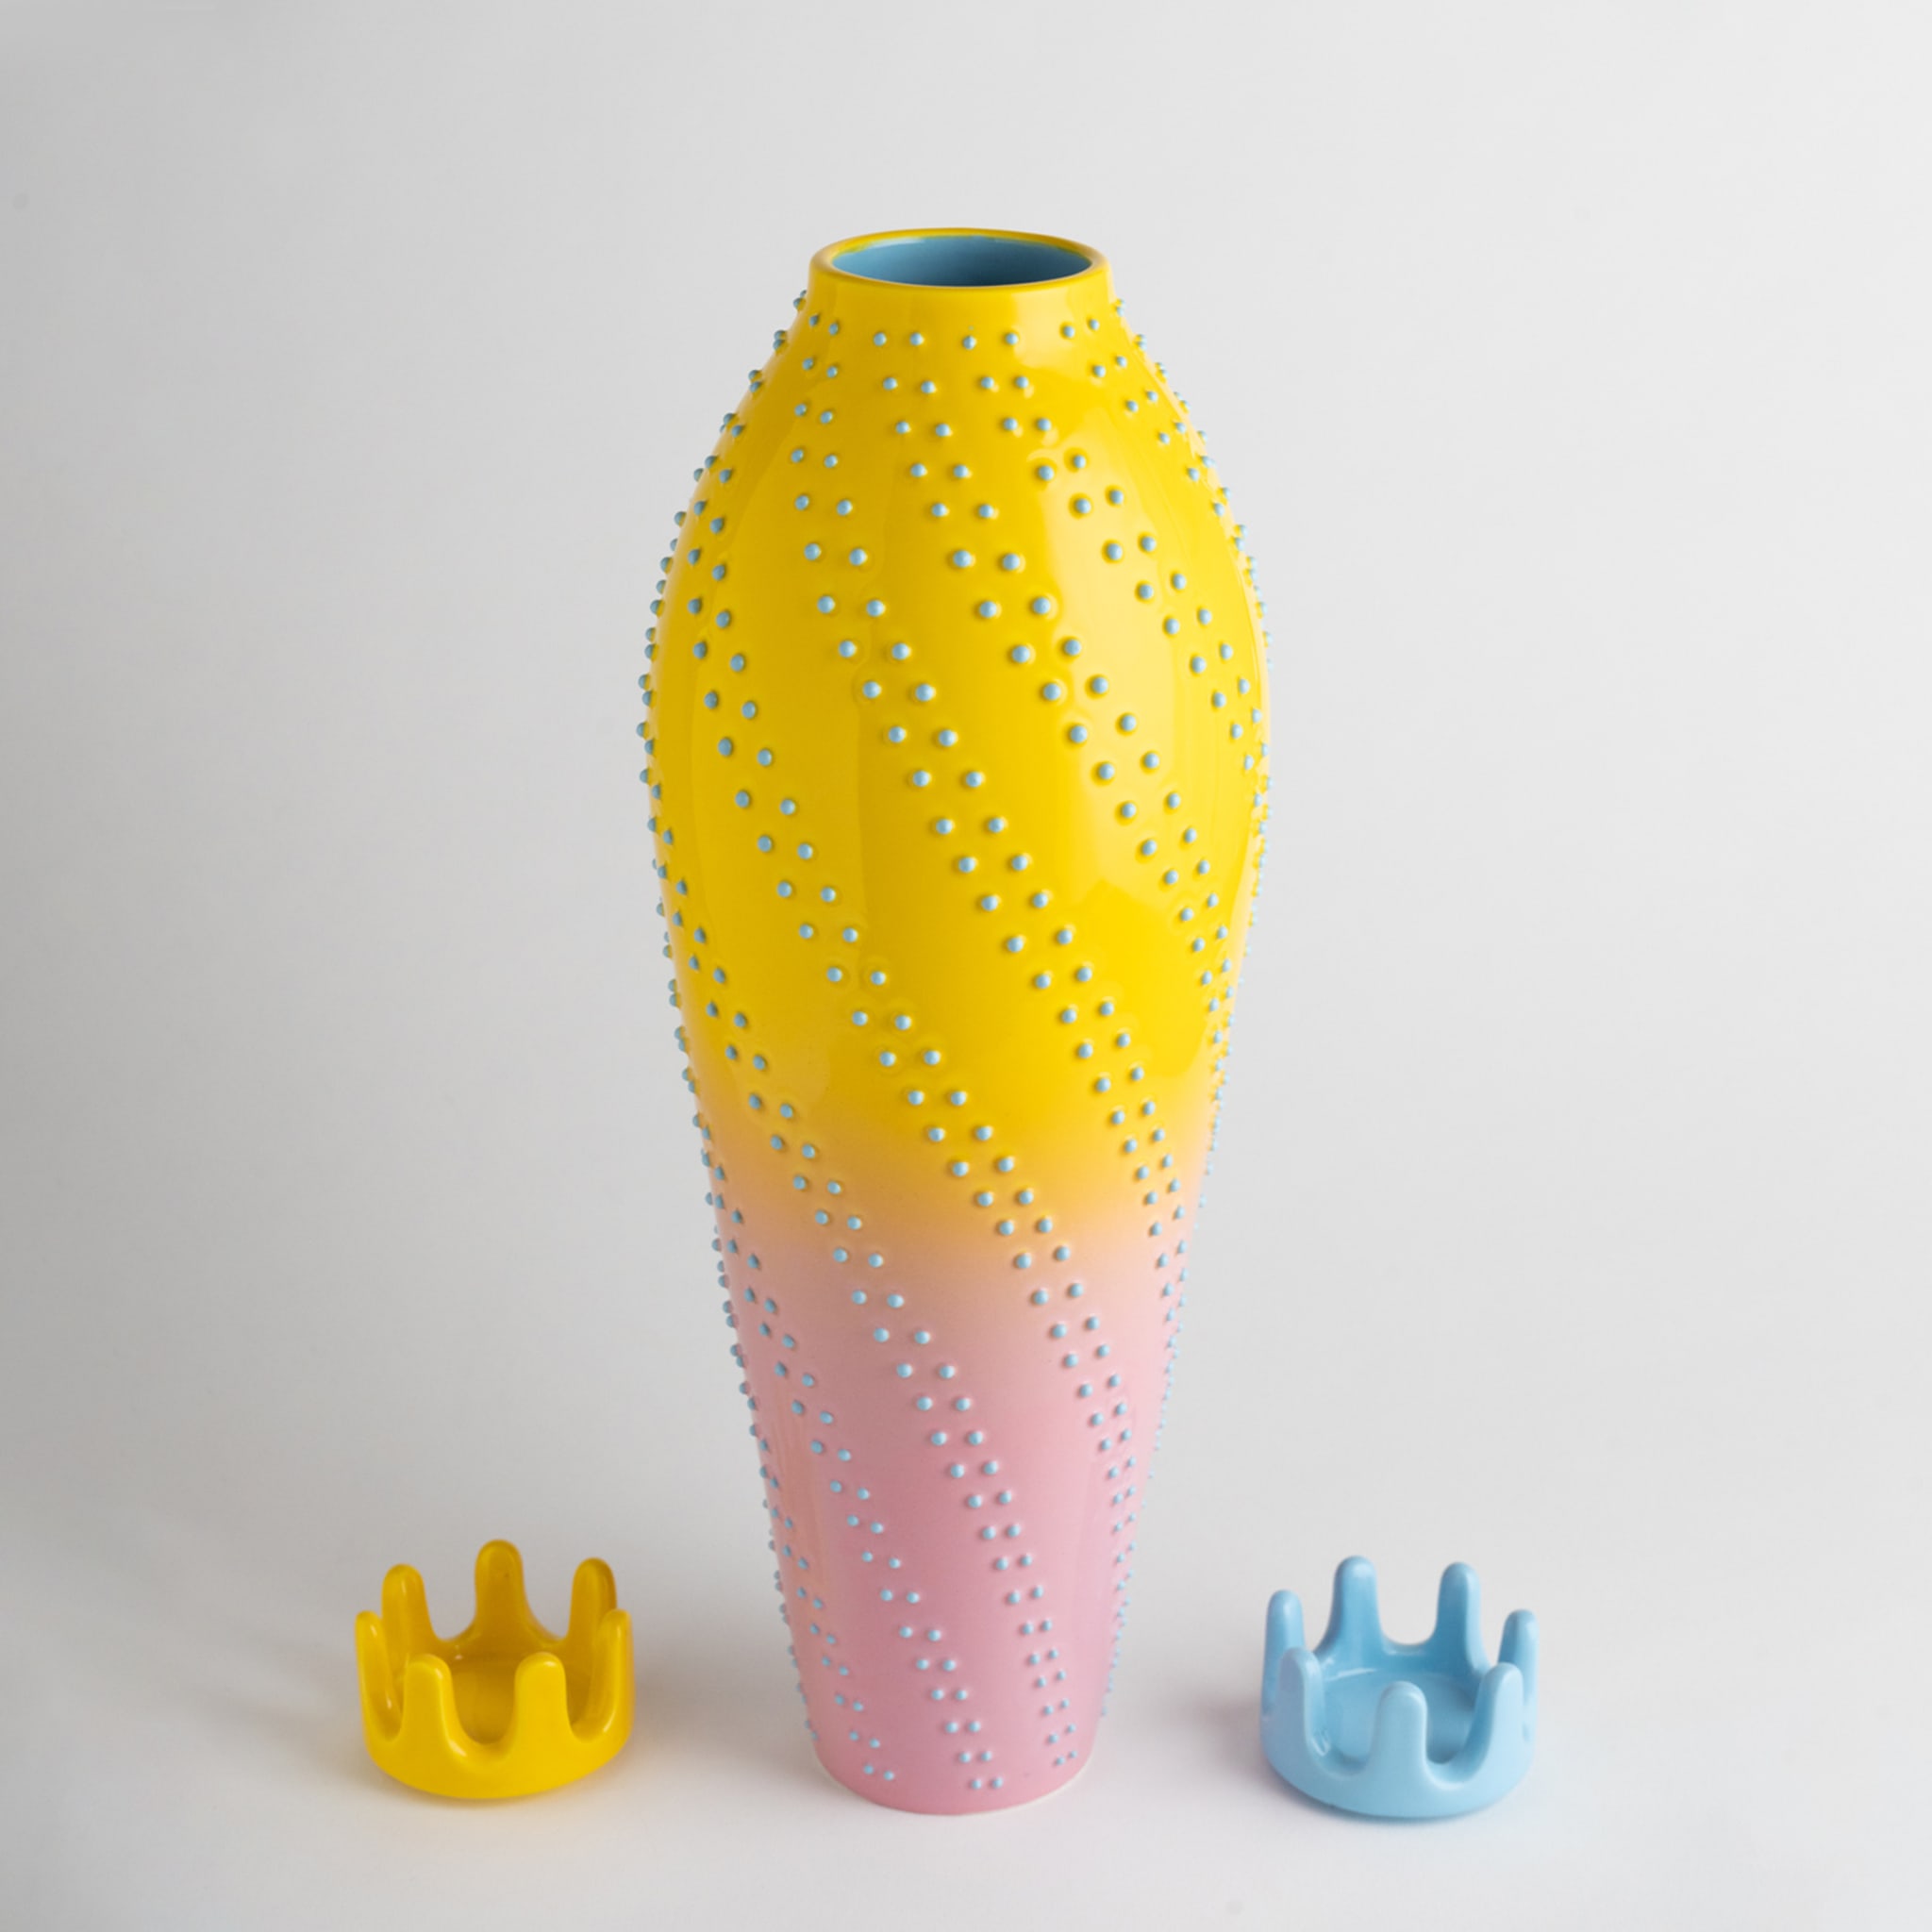 Princex Vase by Adam Nathaniel Furman - Alternative view 3